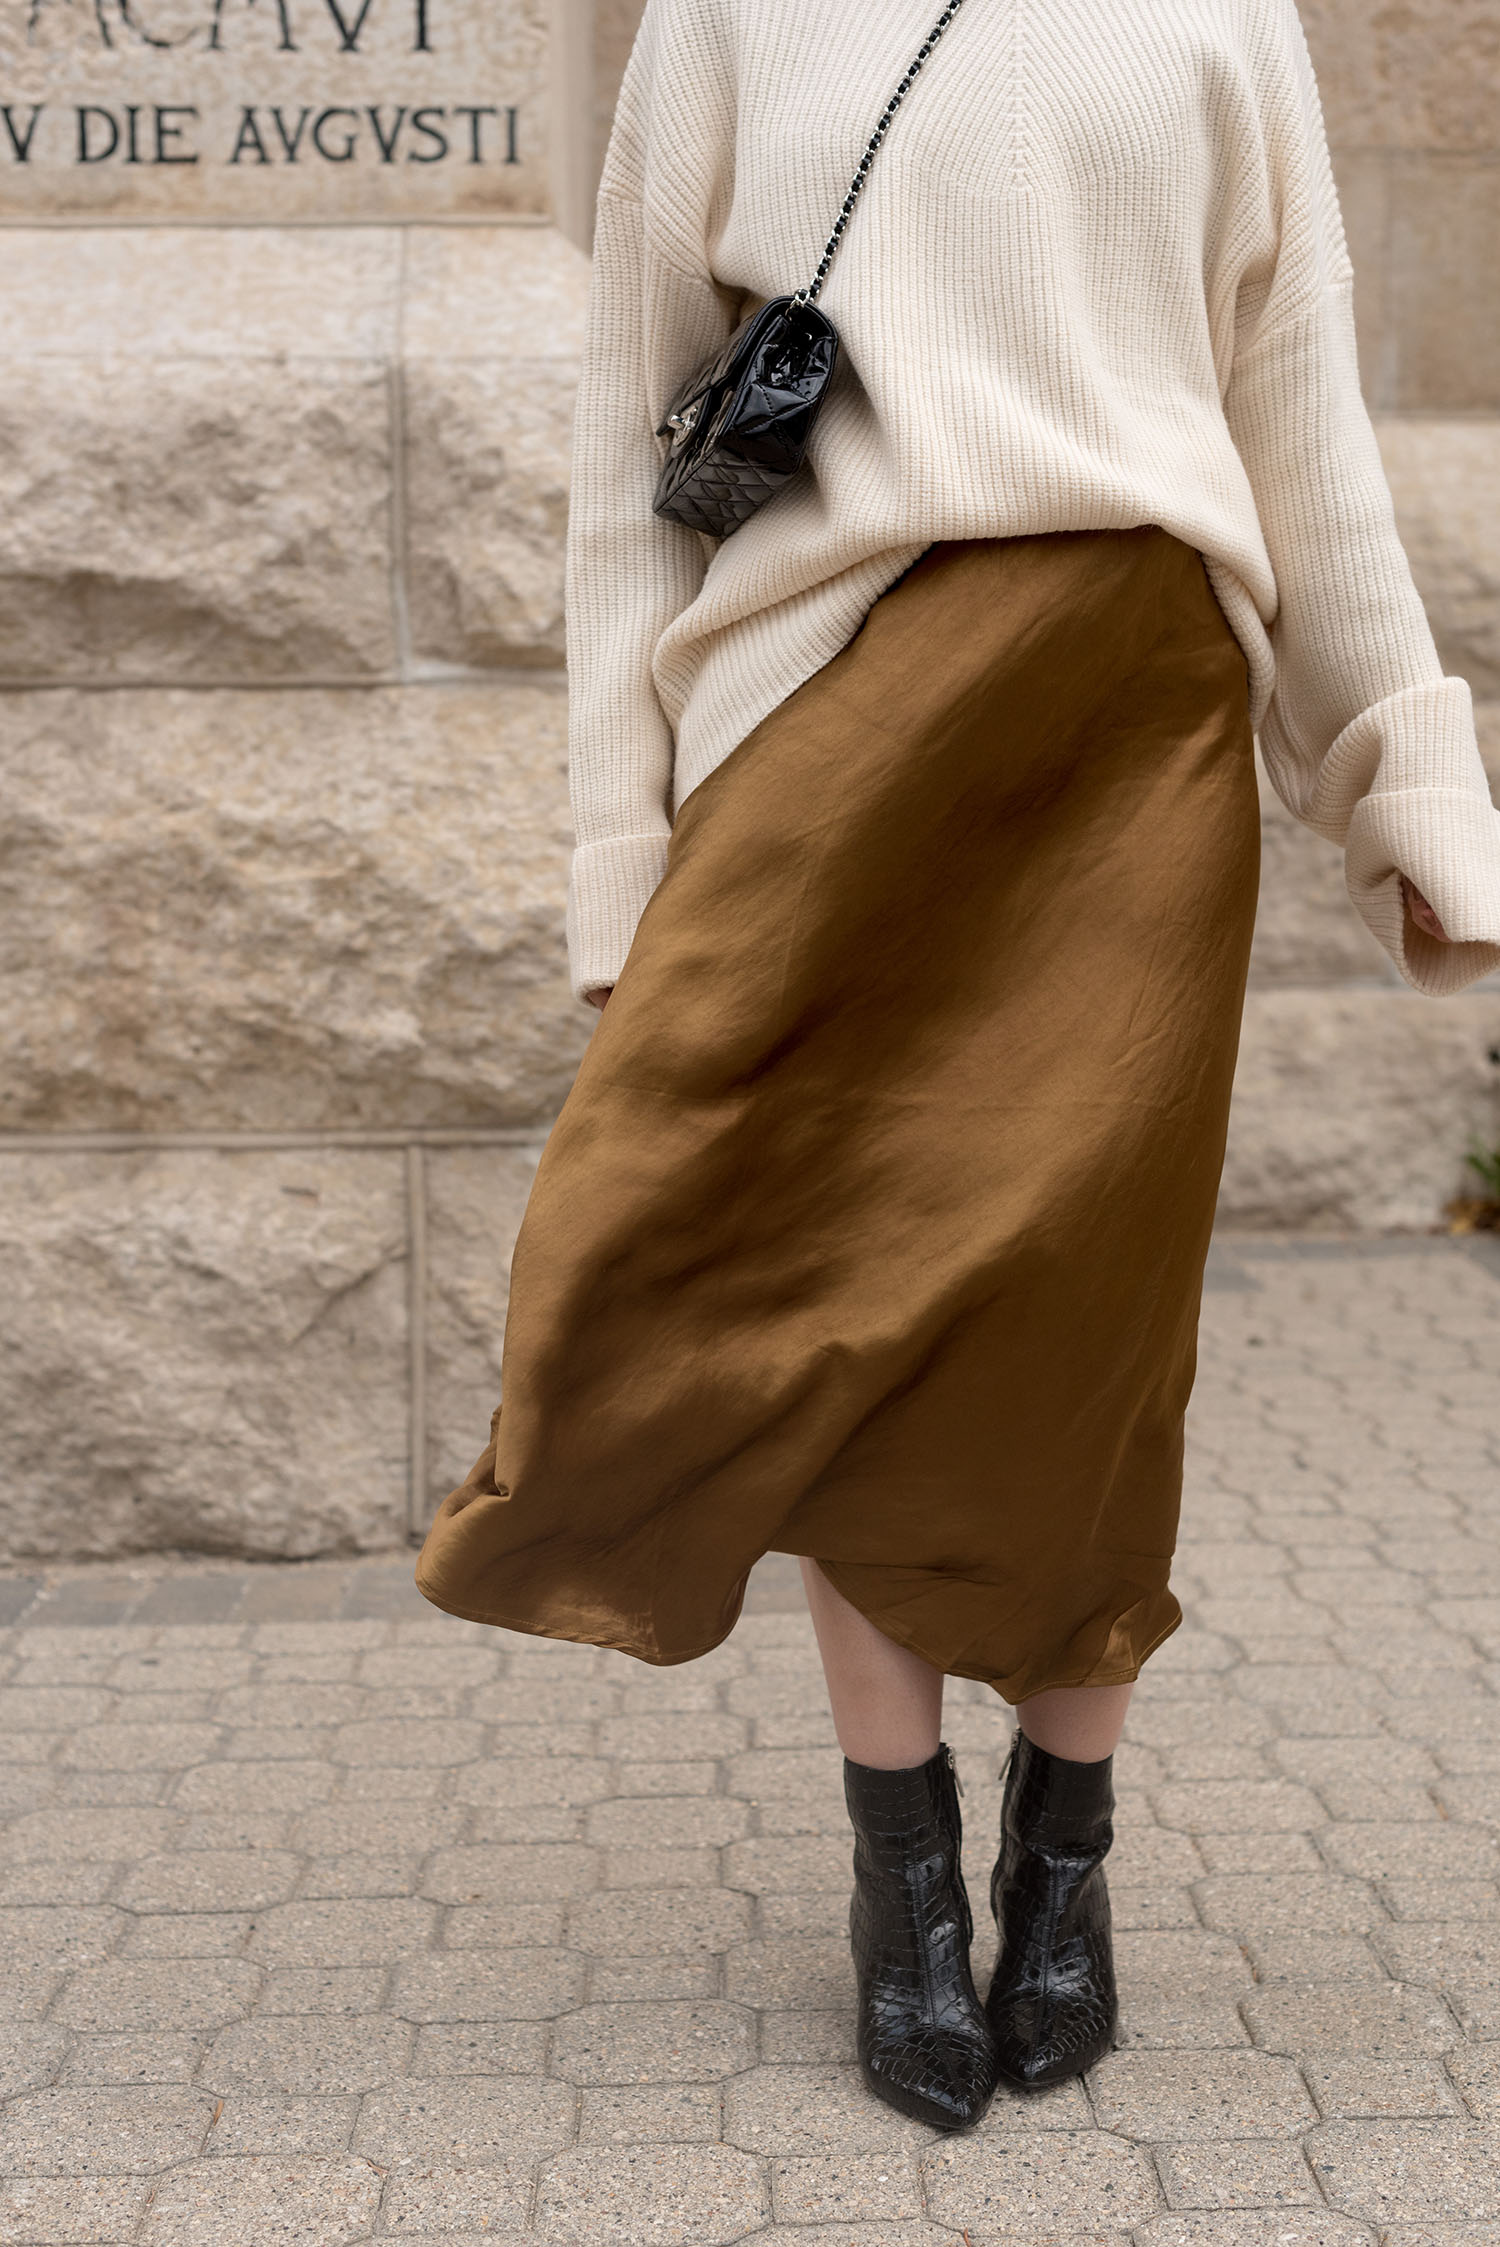 Coco & Vera - Aldo boots, Chanel quilted handbag, Oak + Fort skirt